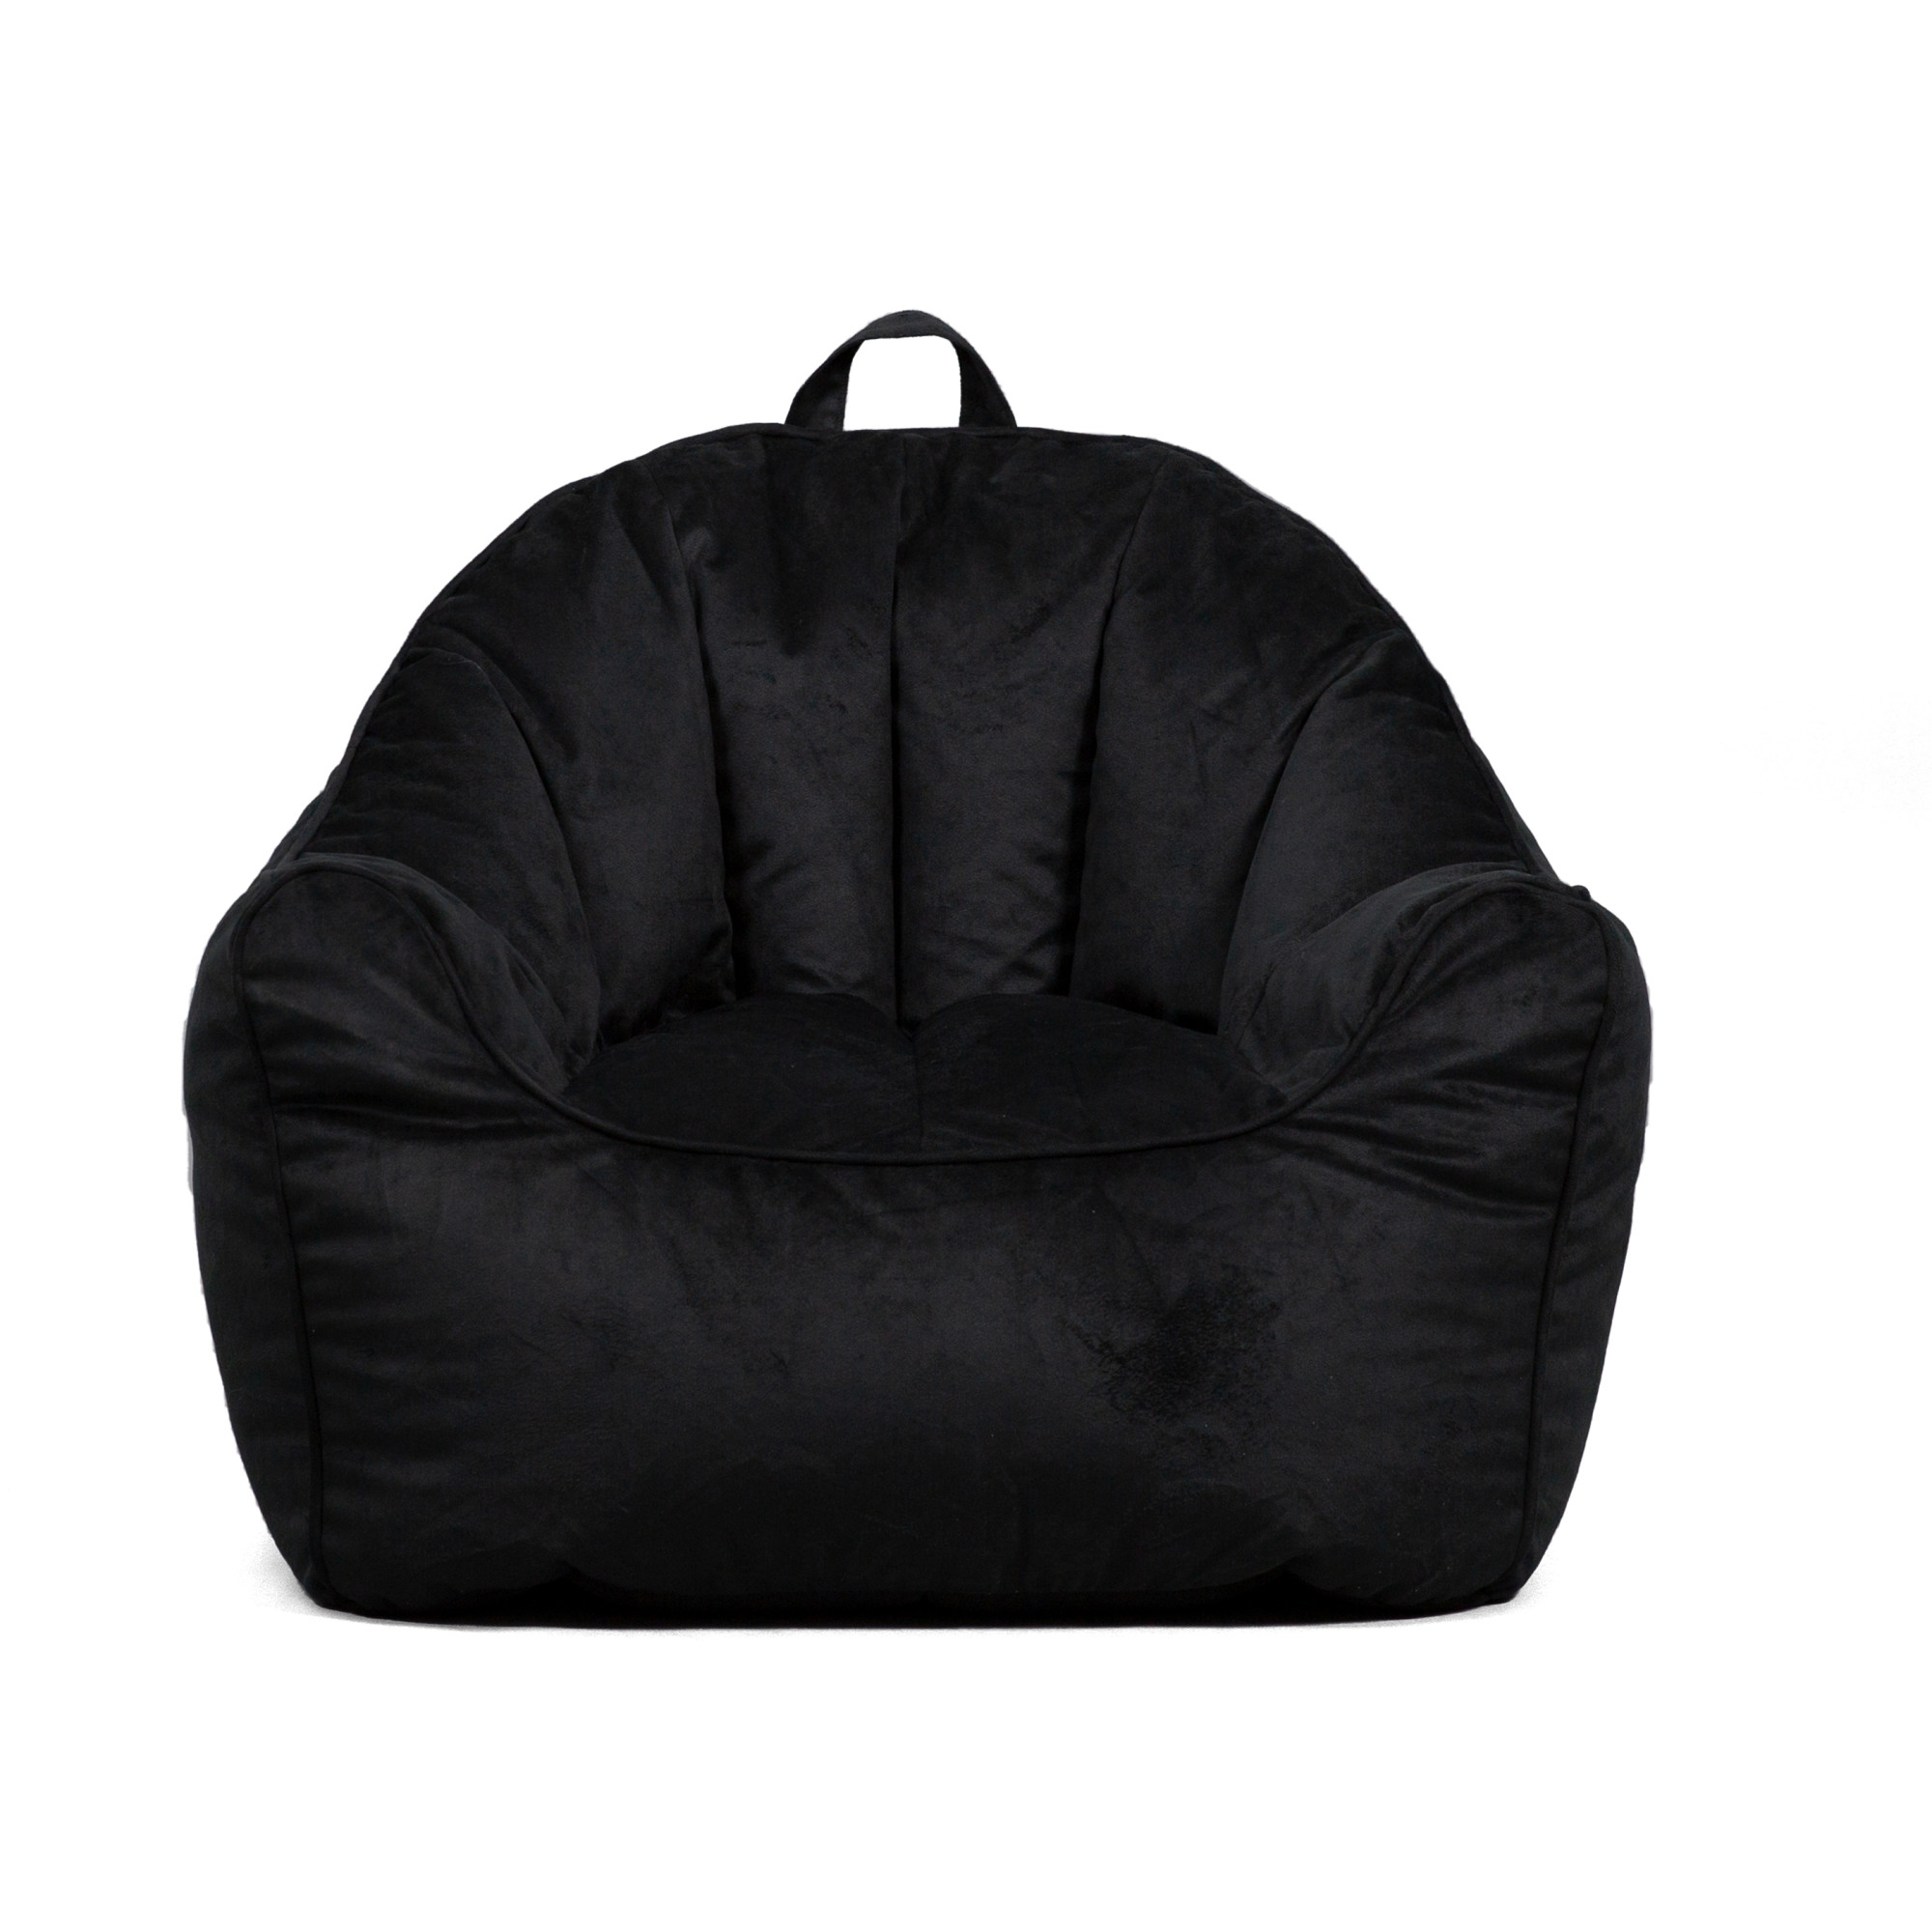 Big Joe Hug Bean Bag Chair, Black Plush, Soft Polyester, 3 feet - image 1 of 8